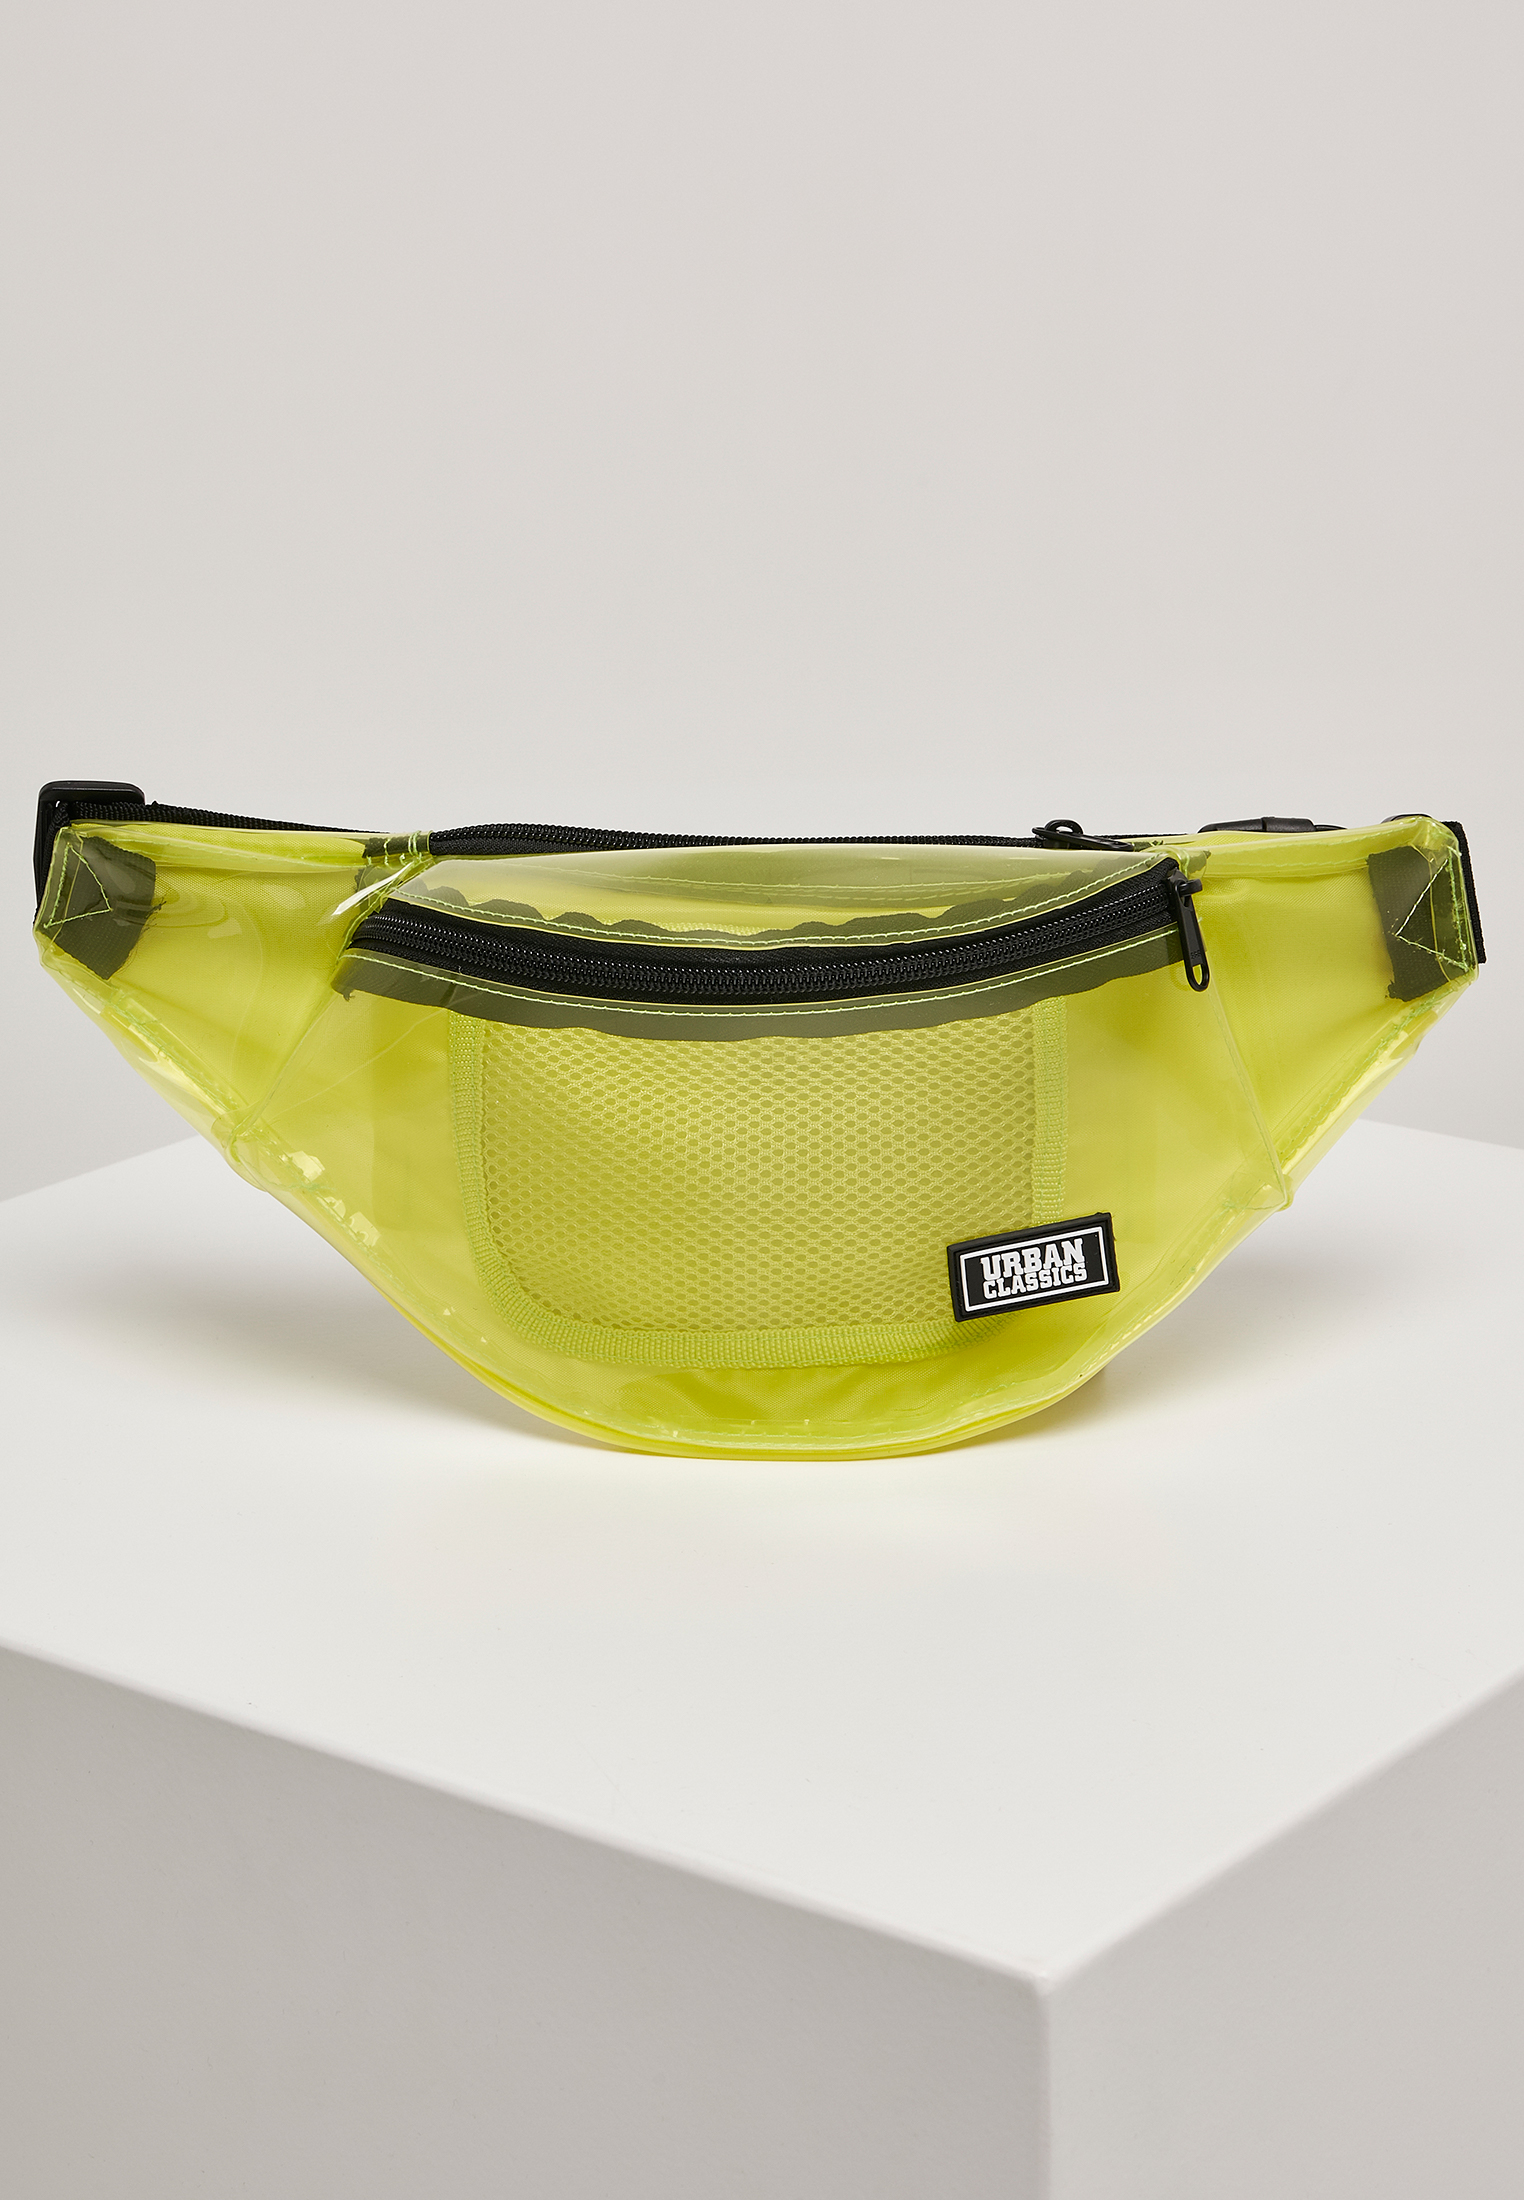 Taschen Transparent Shoulder Bag in Farbe transparent yellow